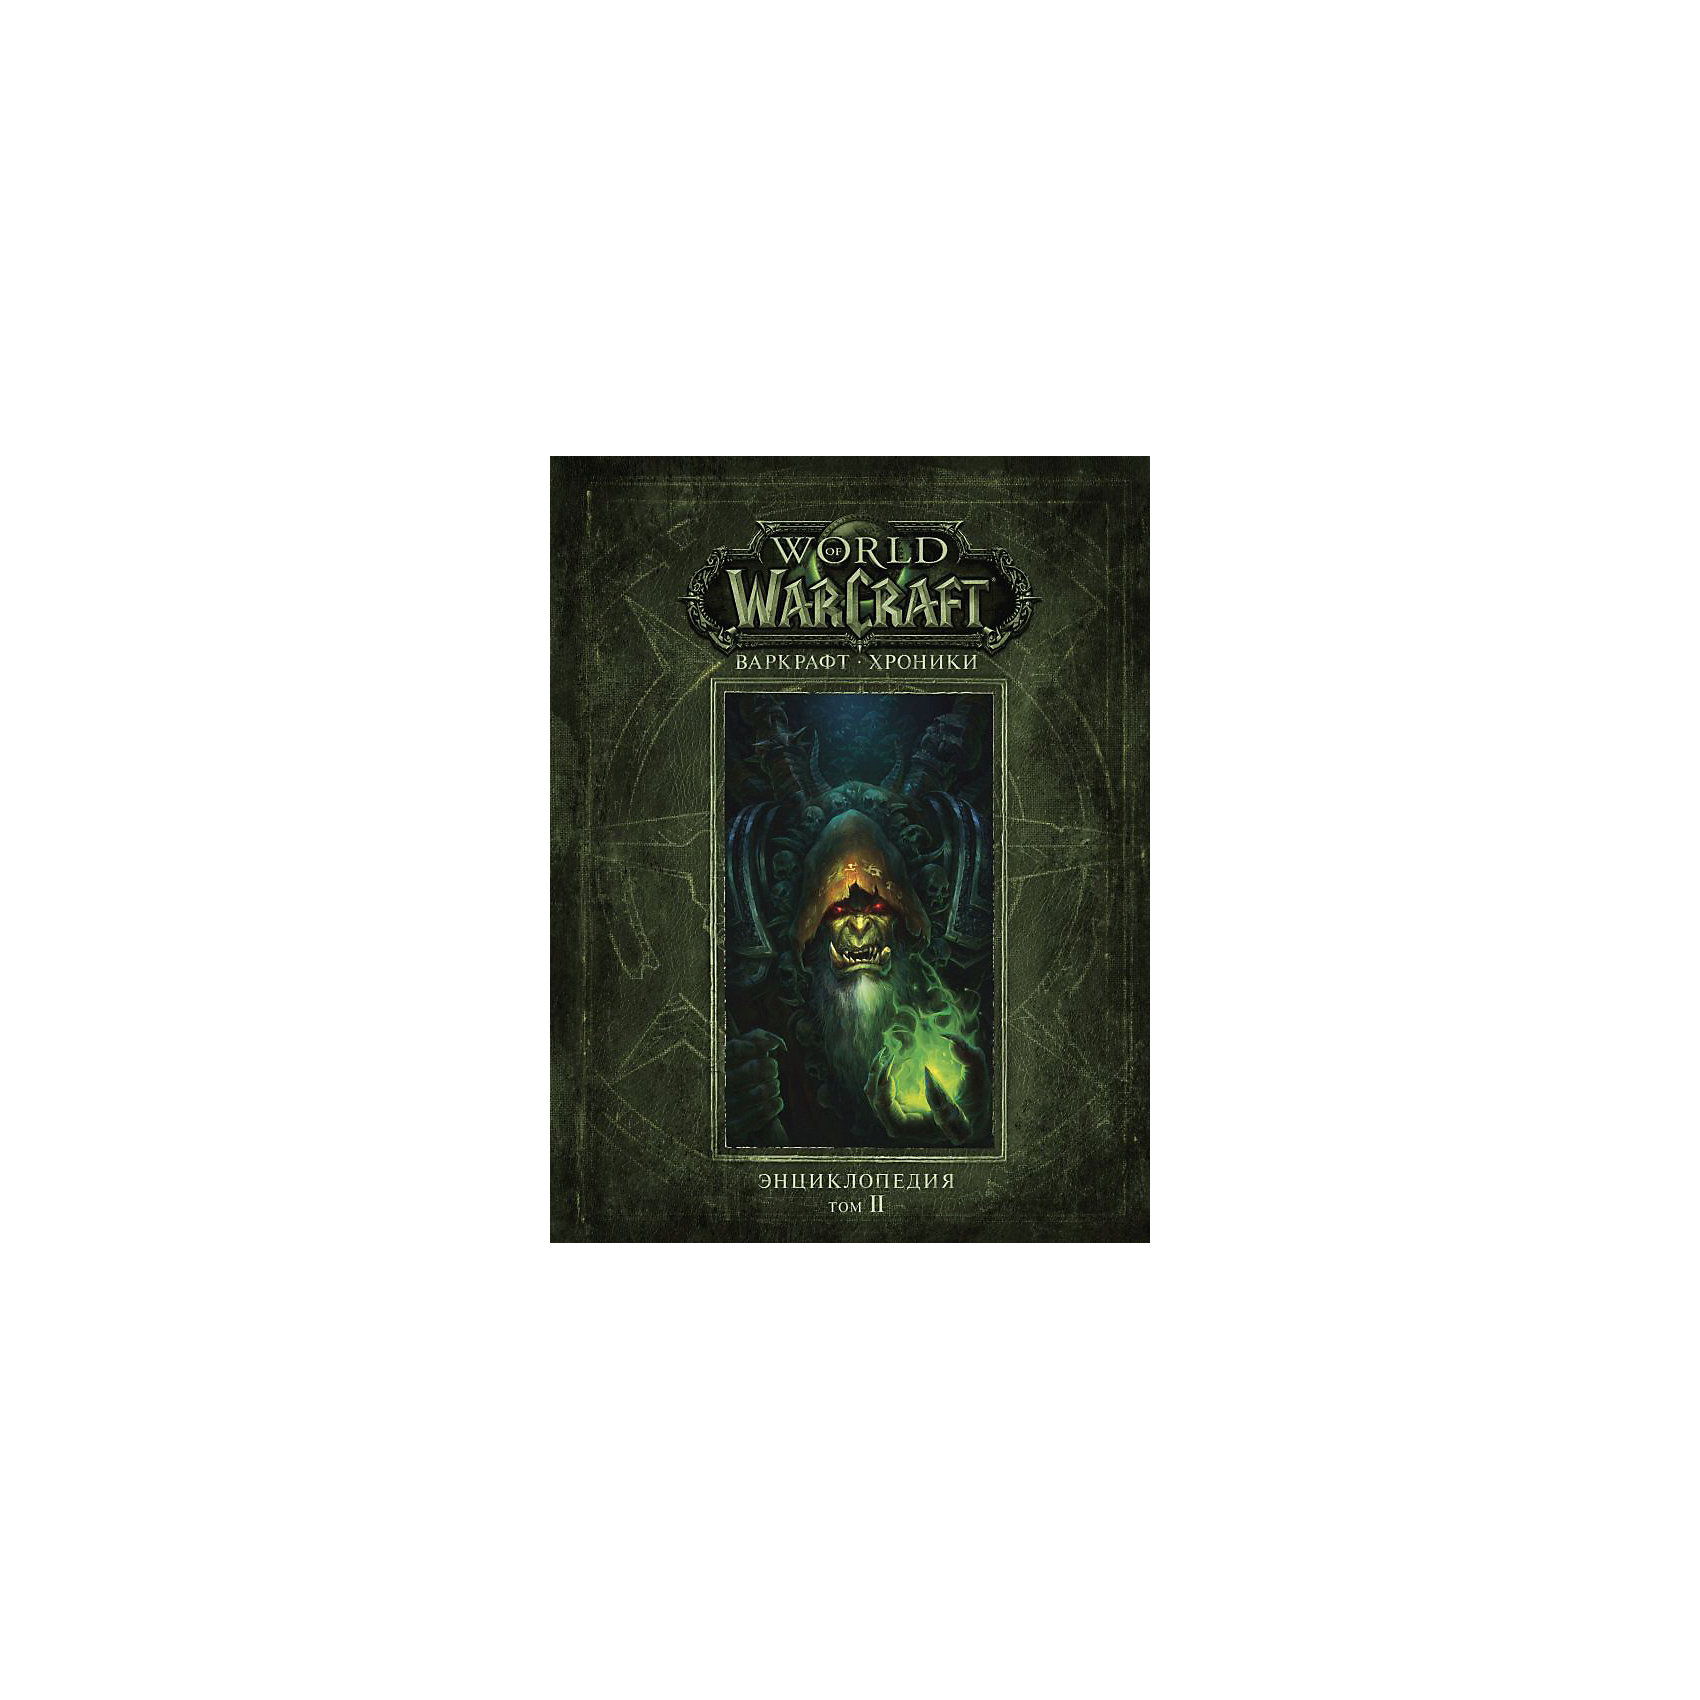 фото Энциклопедия World of Warcraft "Варкрафт: Хроники", том 2 Издательство аст